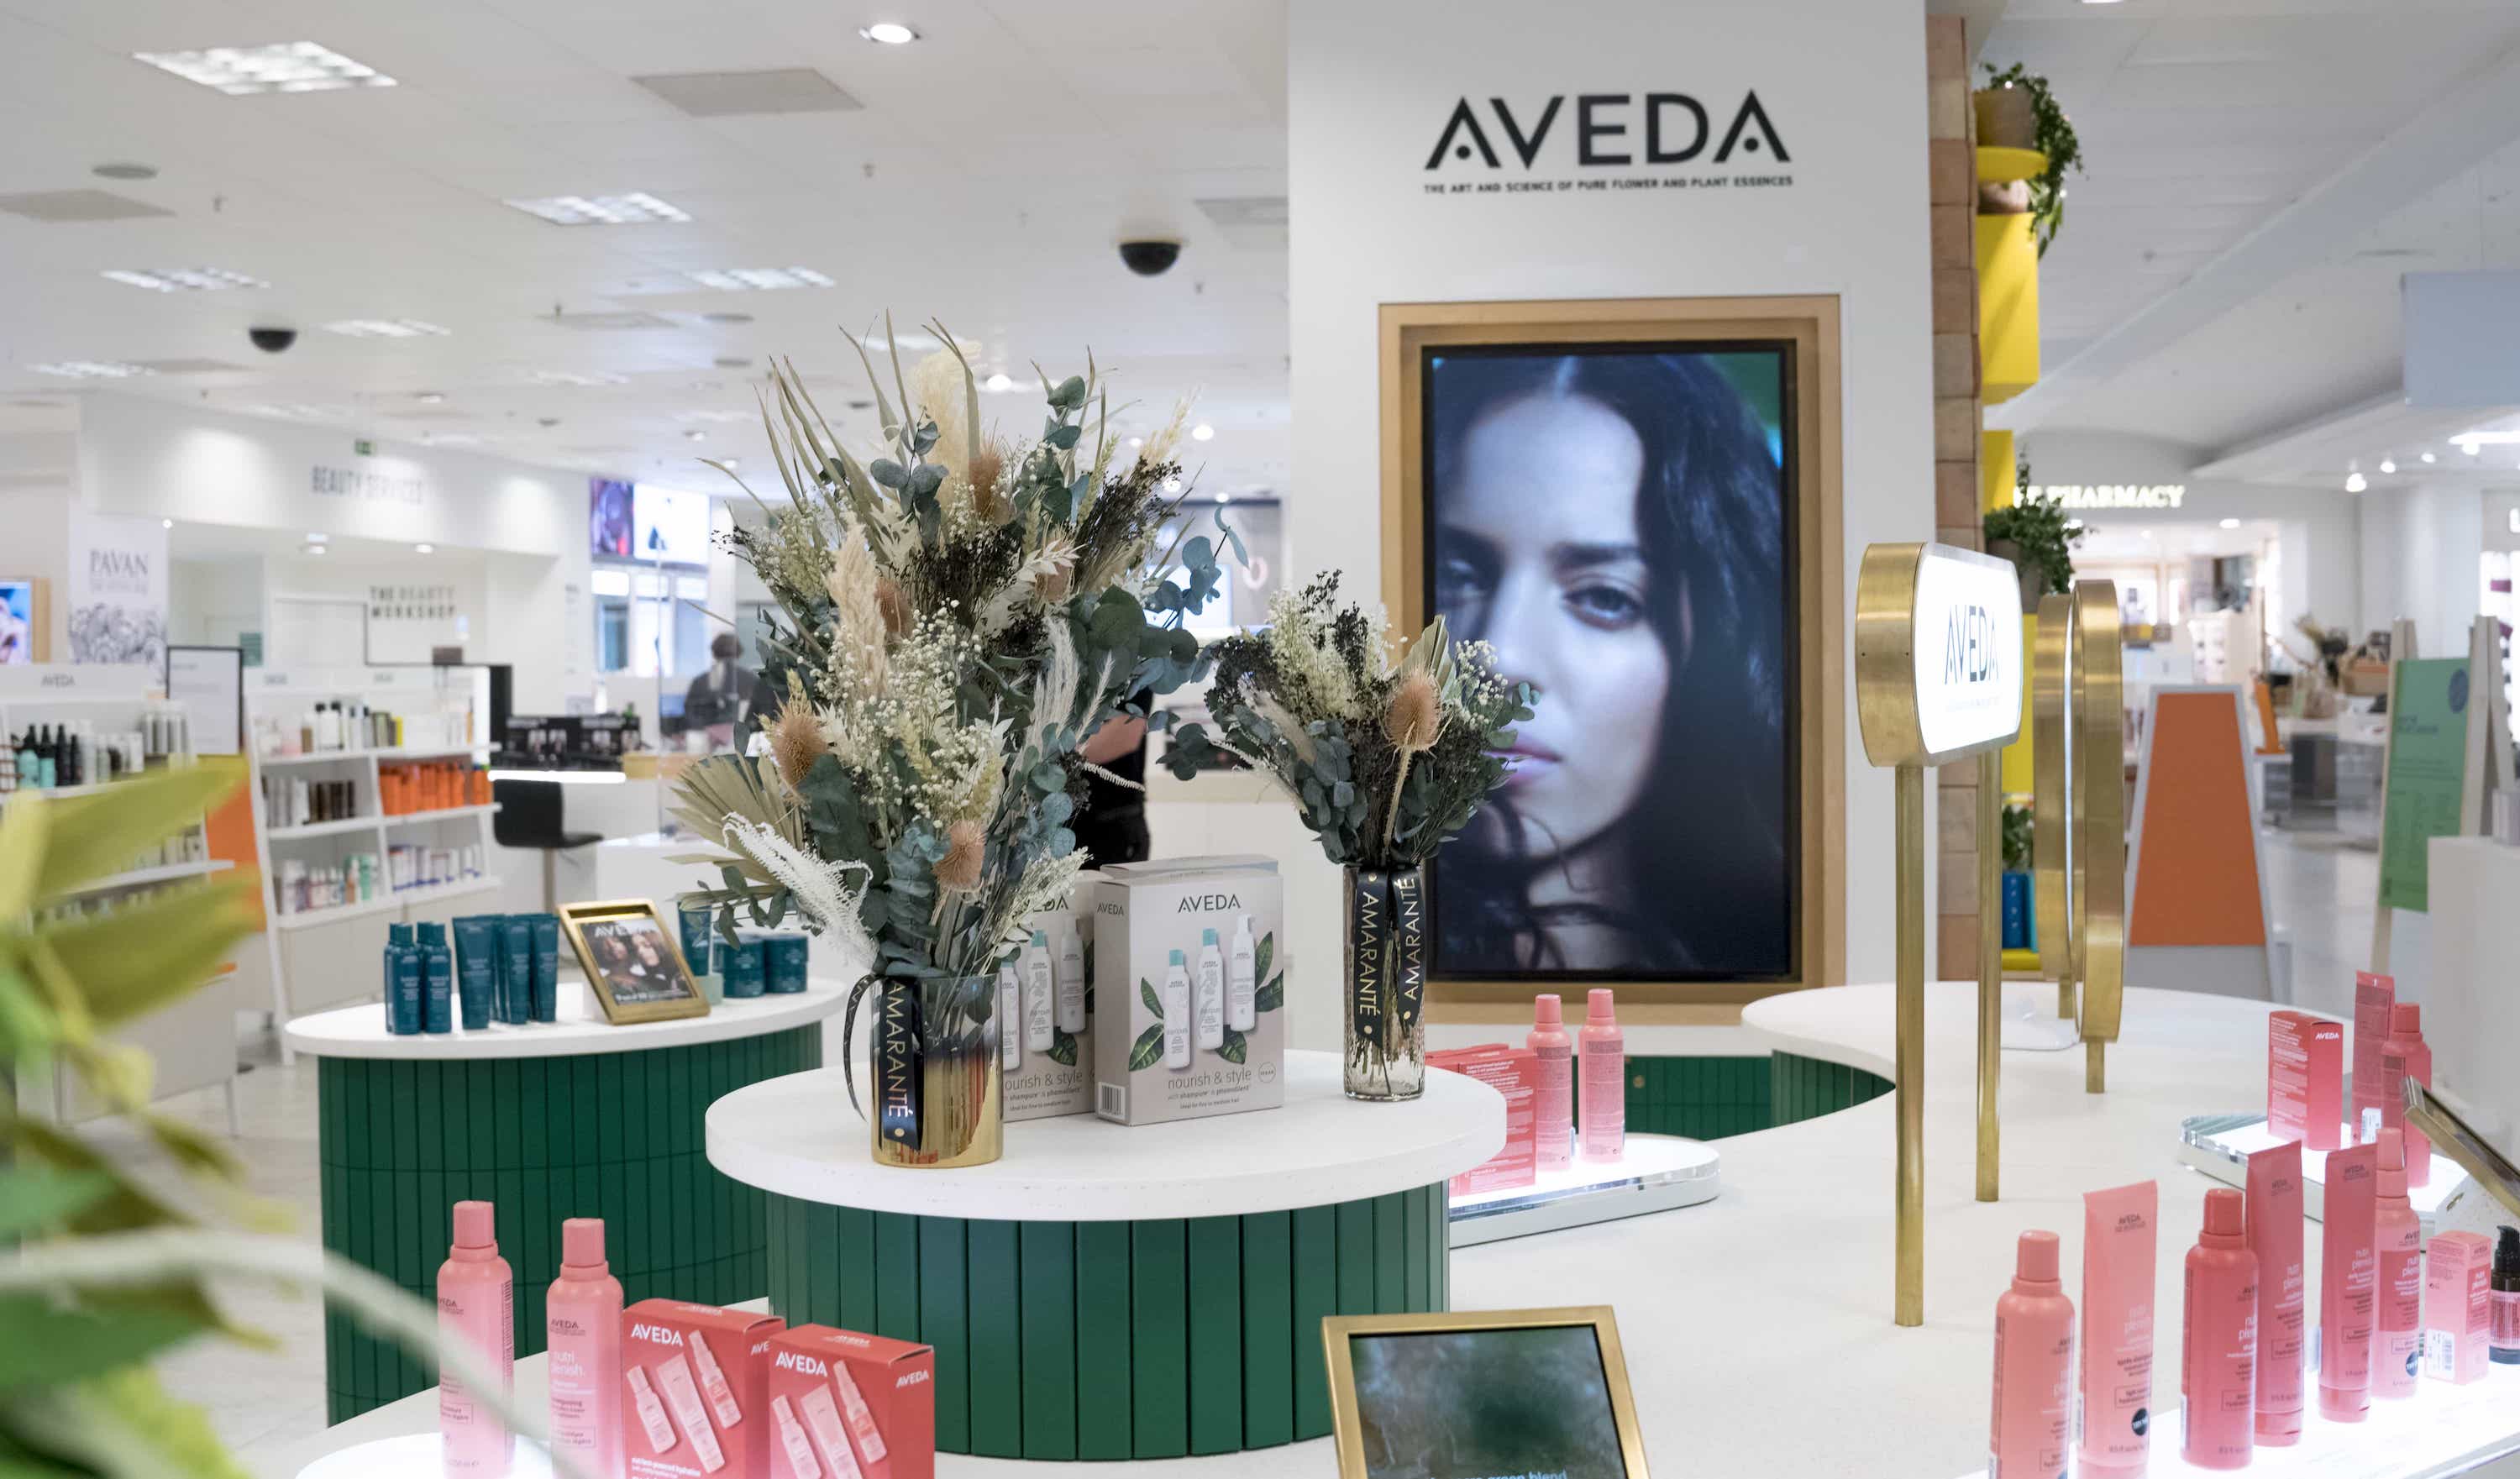 Amaranté Floral Decoration for Aveda's Corporate Event display at Selfridges